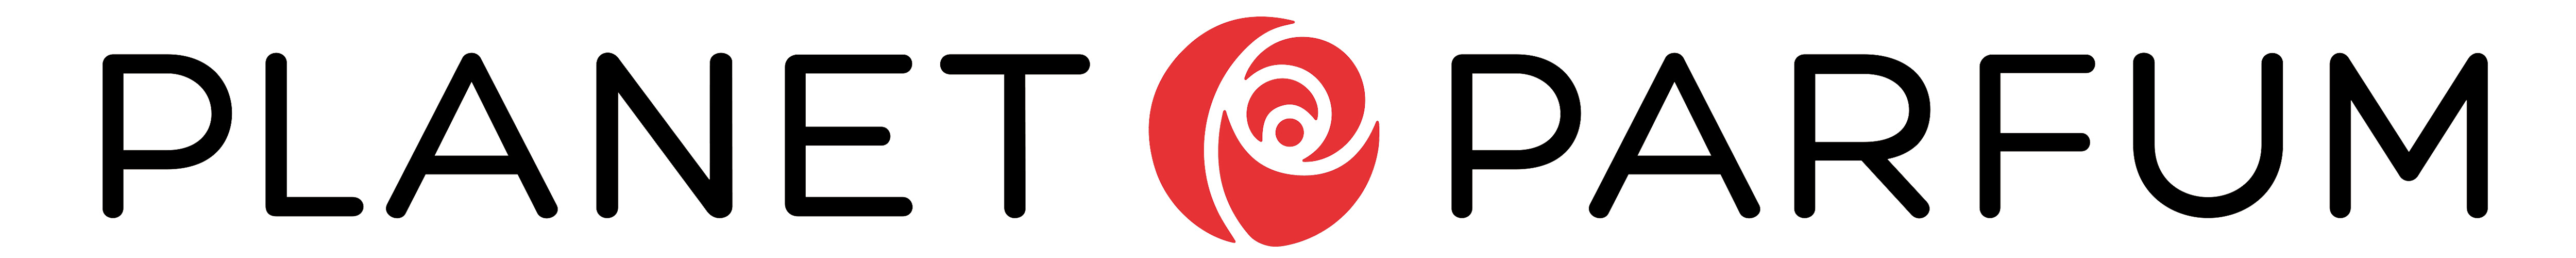 Planet Parfum Logo png